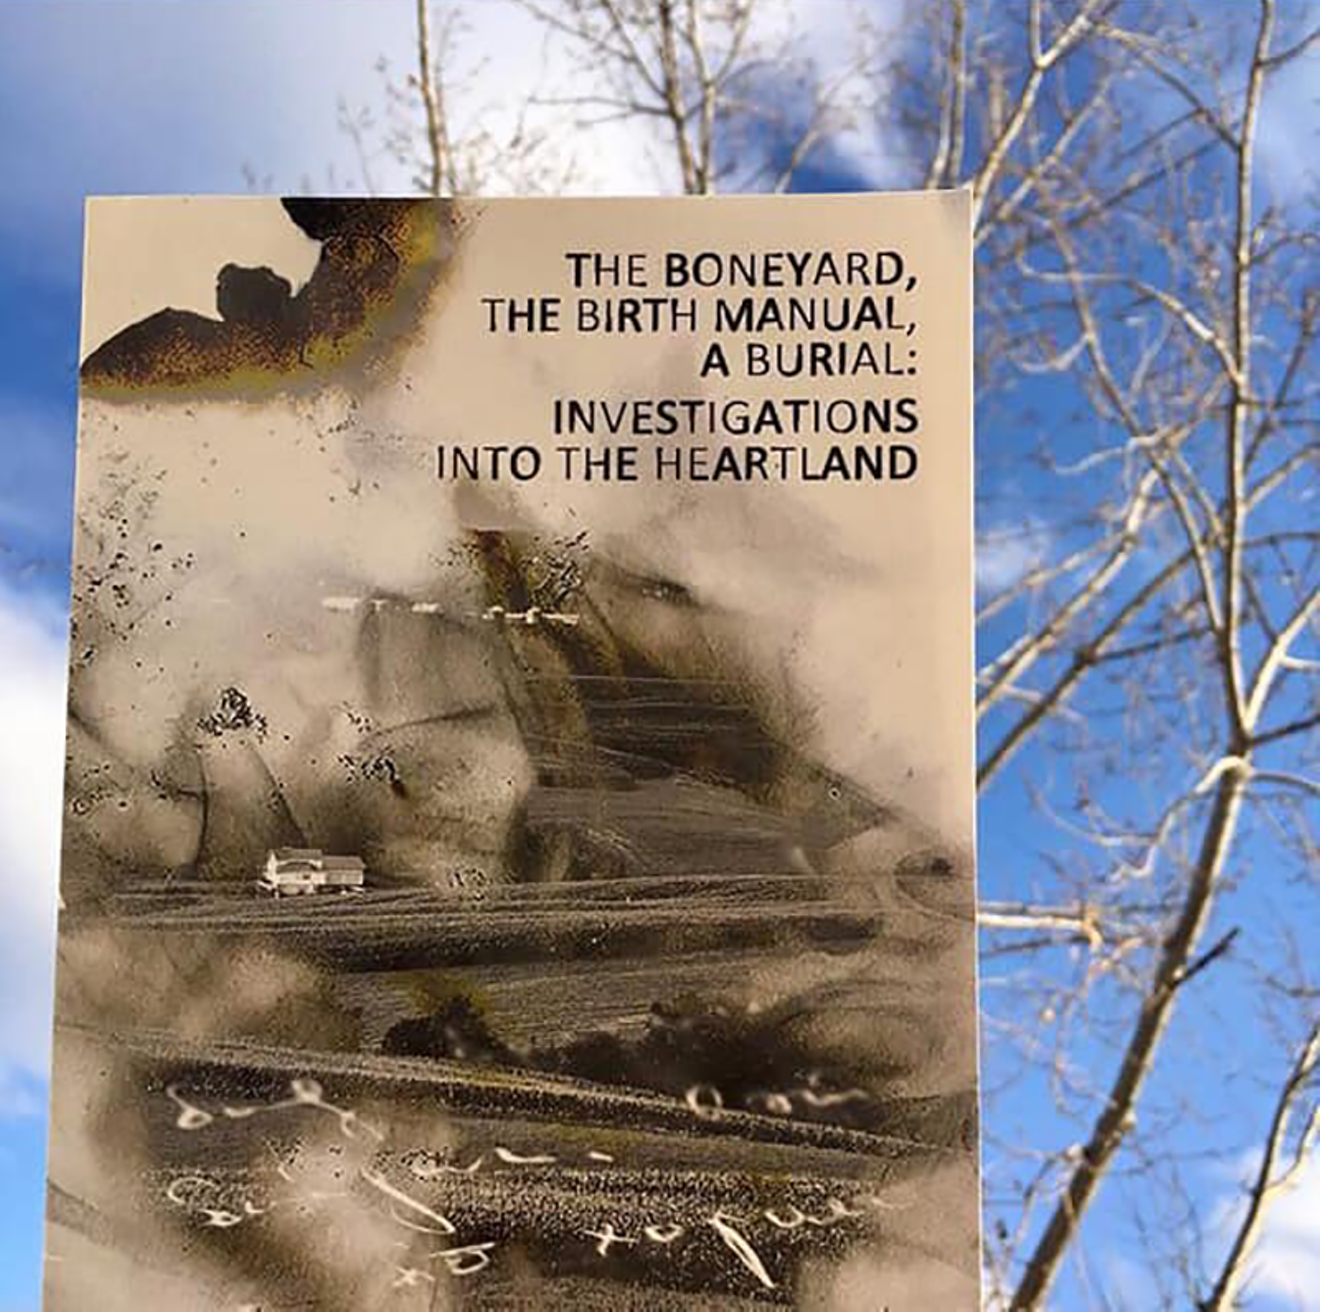 Julia Madsen 2018 imprint from Trembling Pillow Press, The Boneyard, The Birth Manual, A Burial: Investigations Into the Heartland.